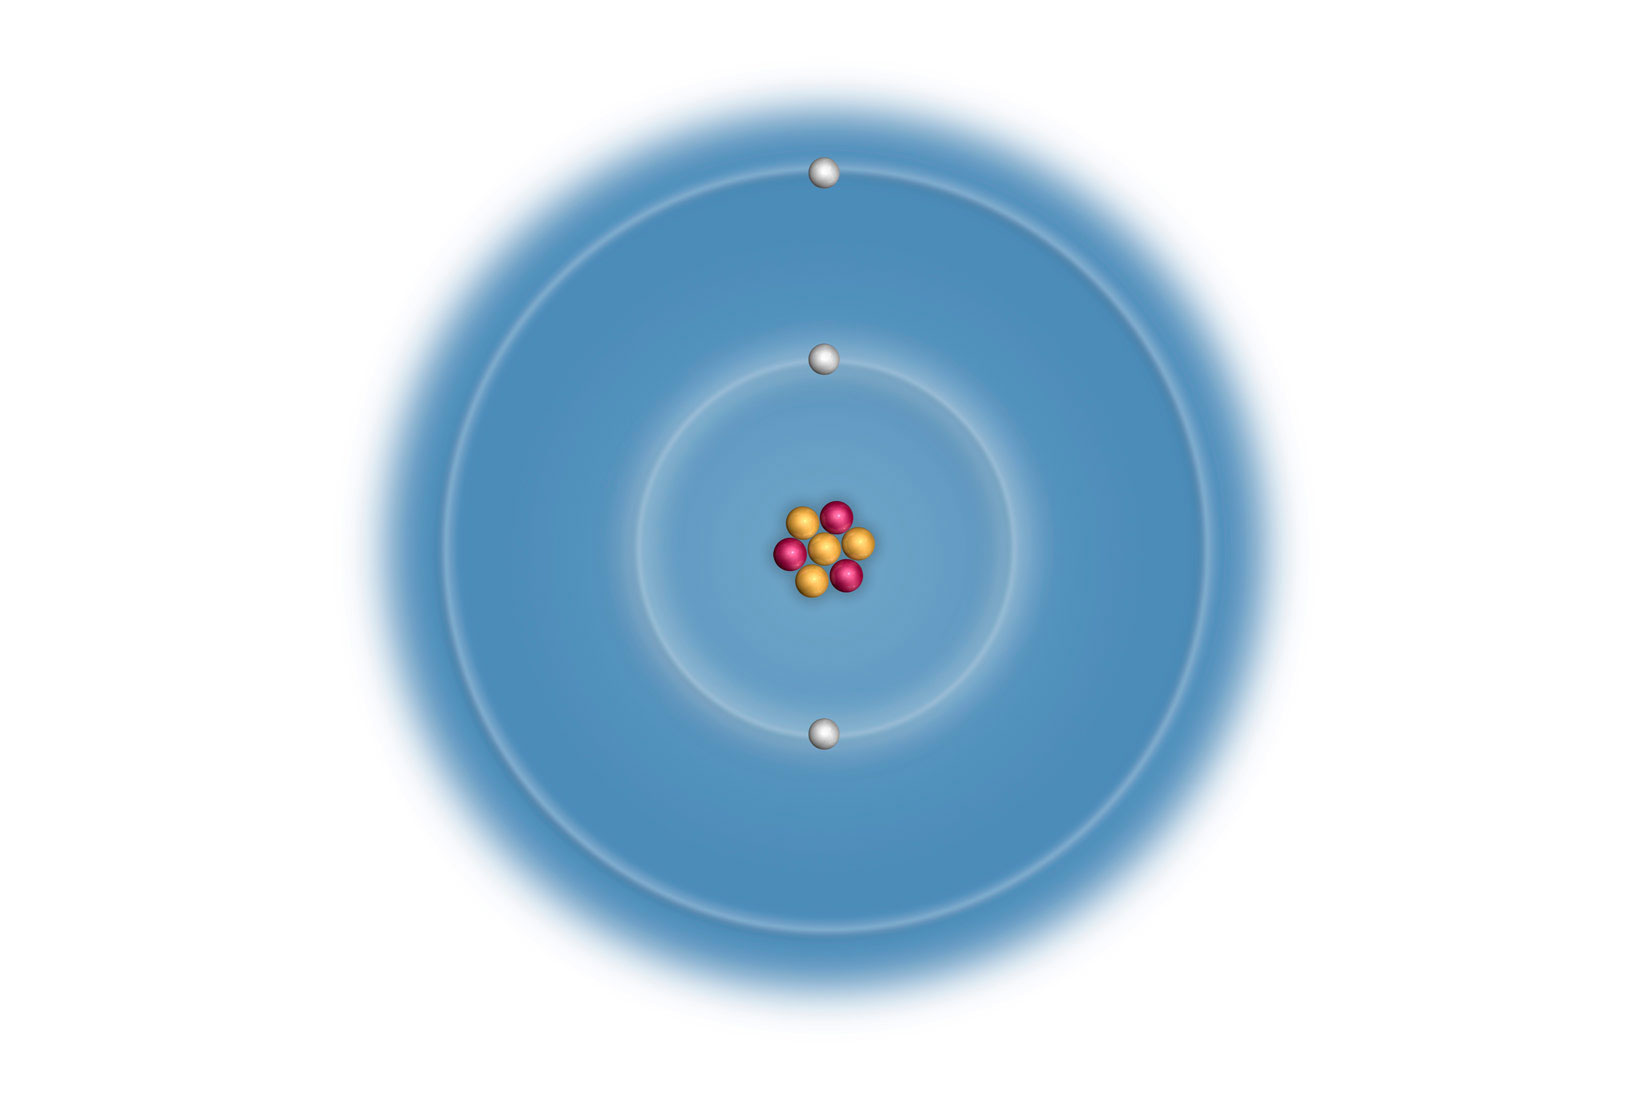 Litij, shematski prikaz građe atoma